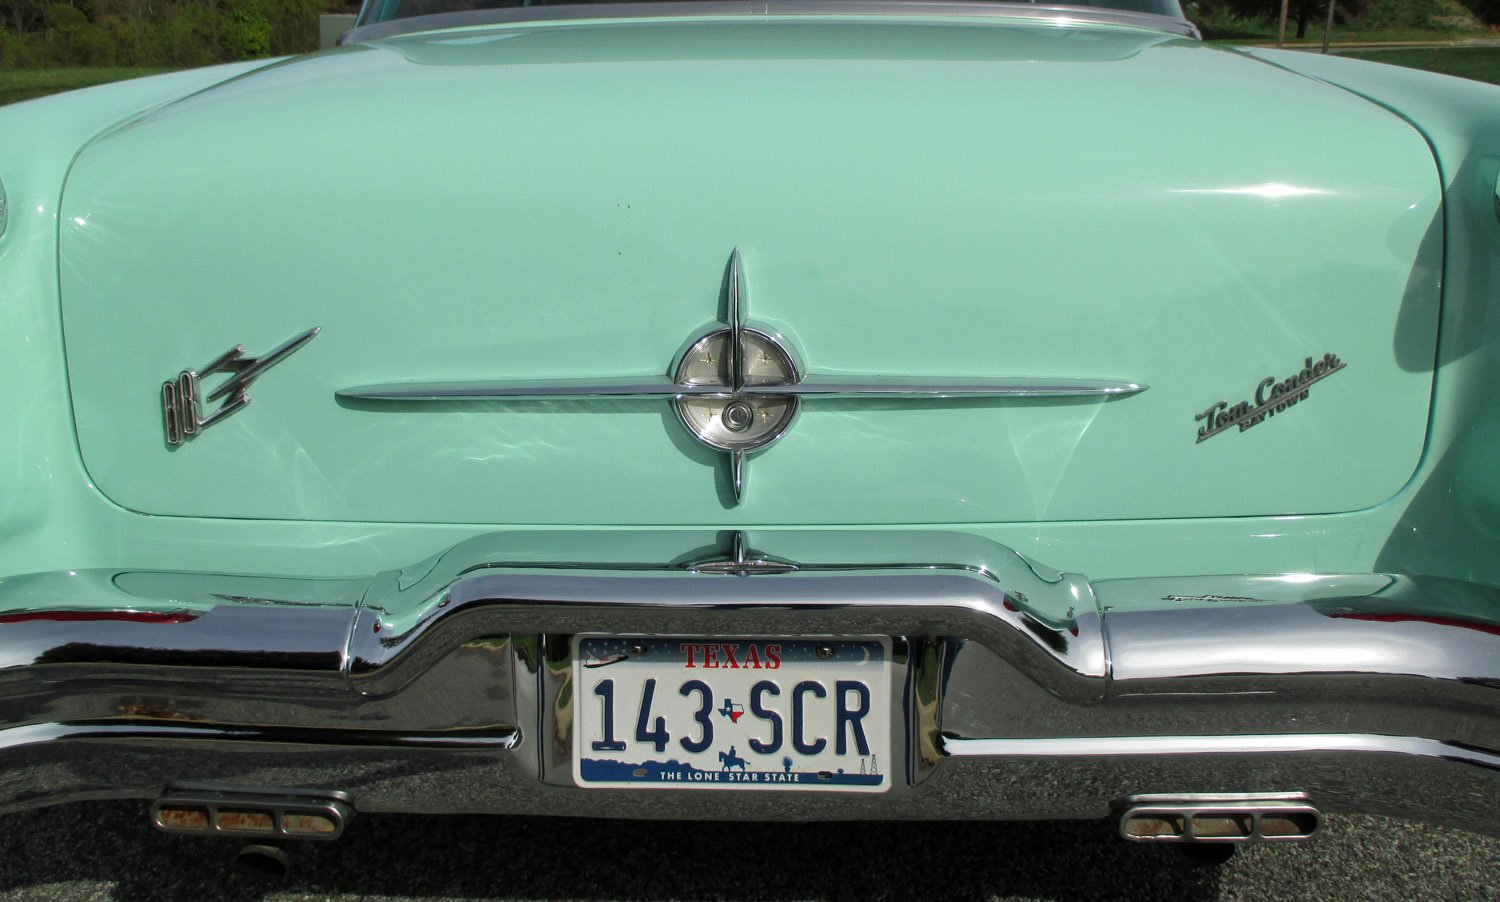 1956 Oldsmobile Super 88